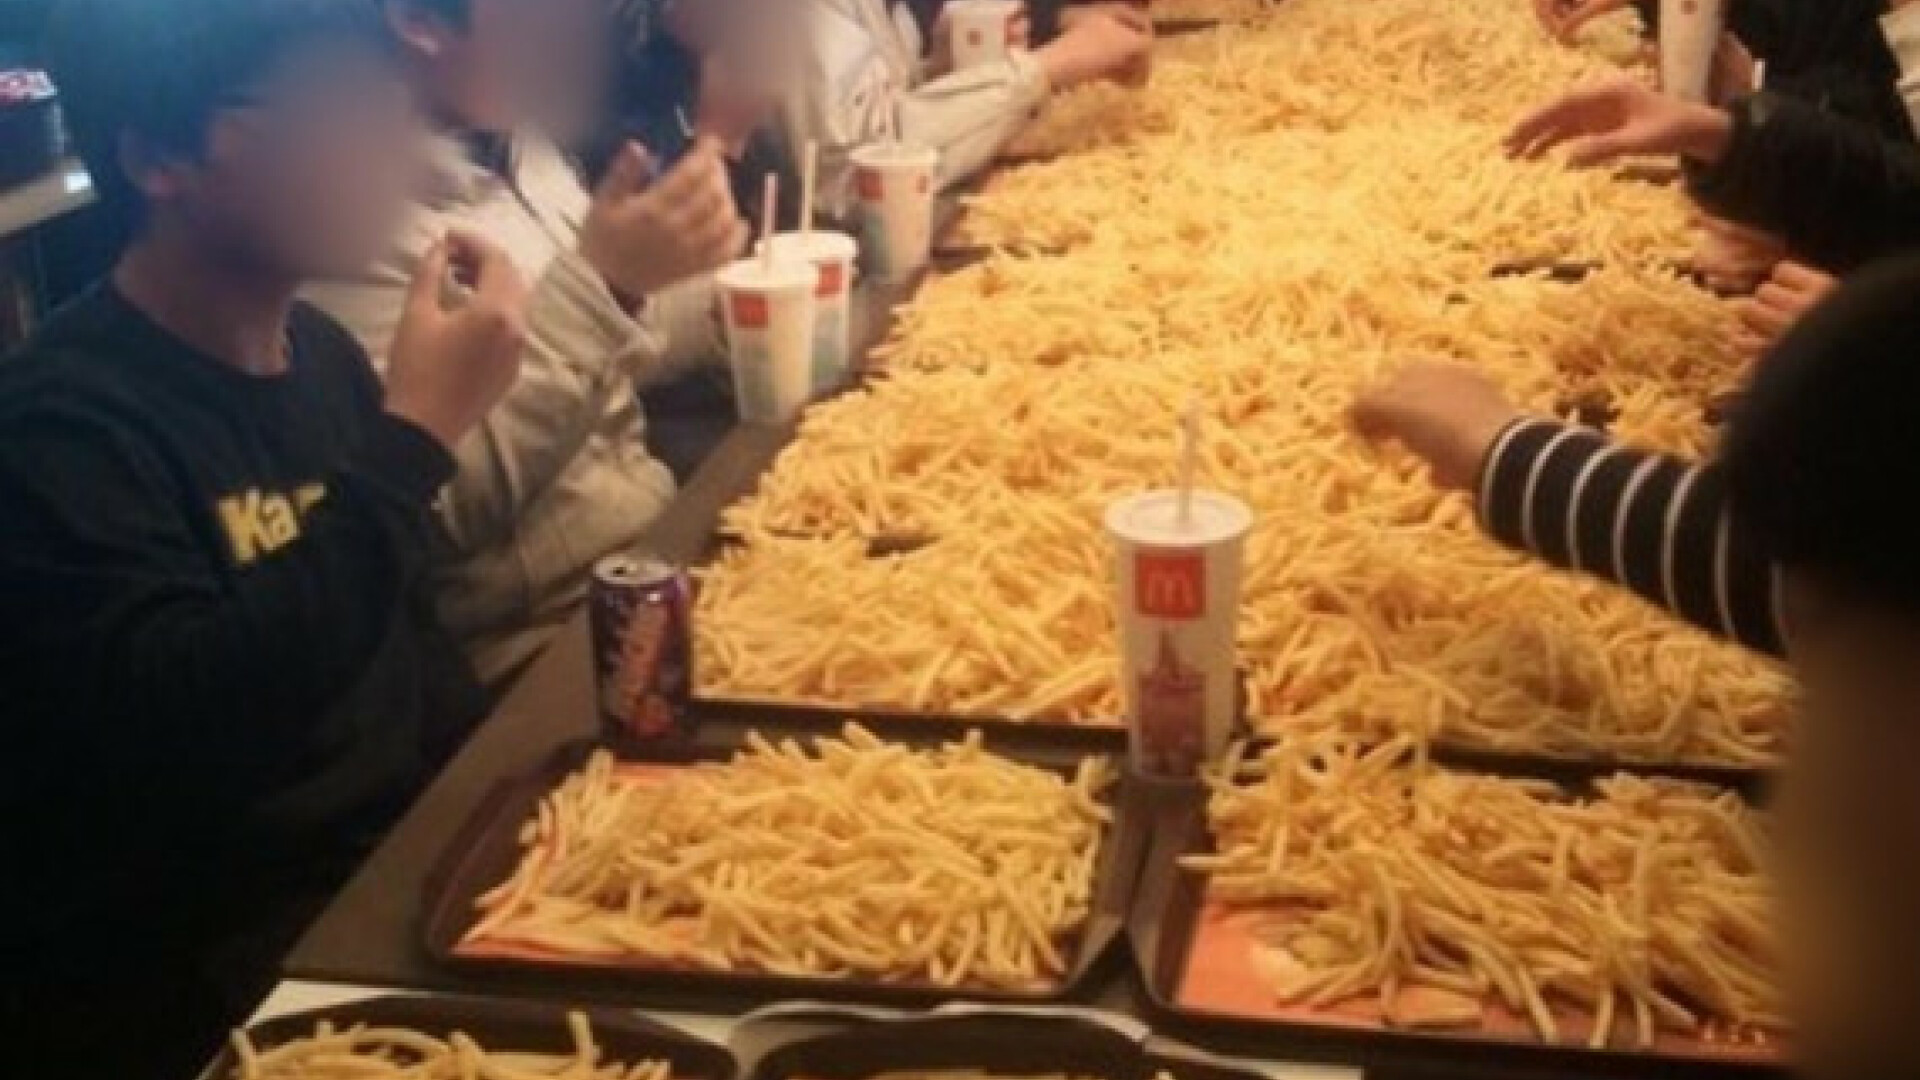 copii mananca multi cartofi prajiti la McDonald's